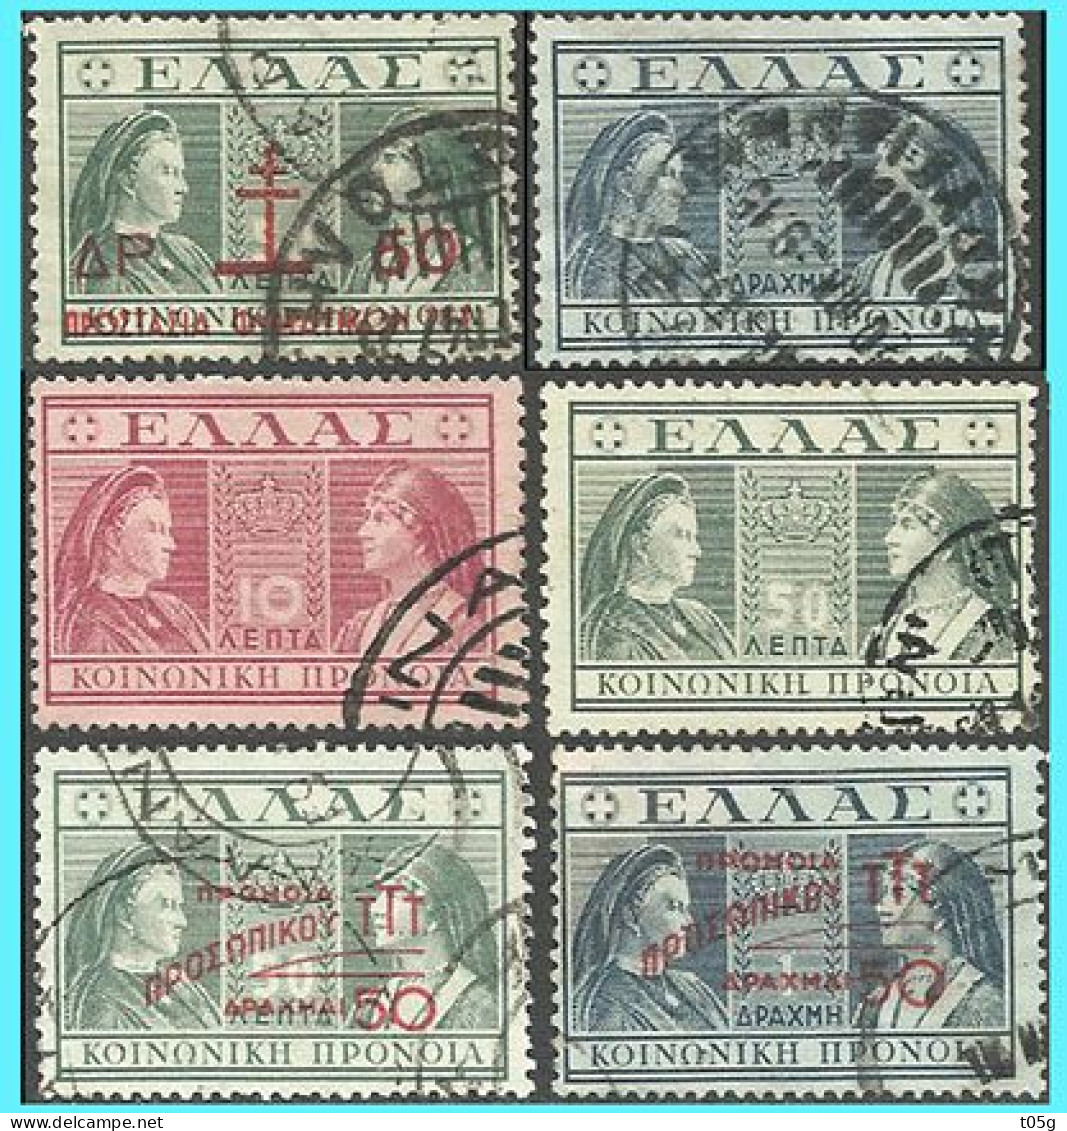 GREECE - GRECE - HELLAS 1944: Charity Stamps.used - Bienfaisance